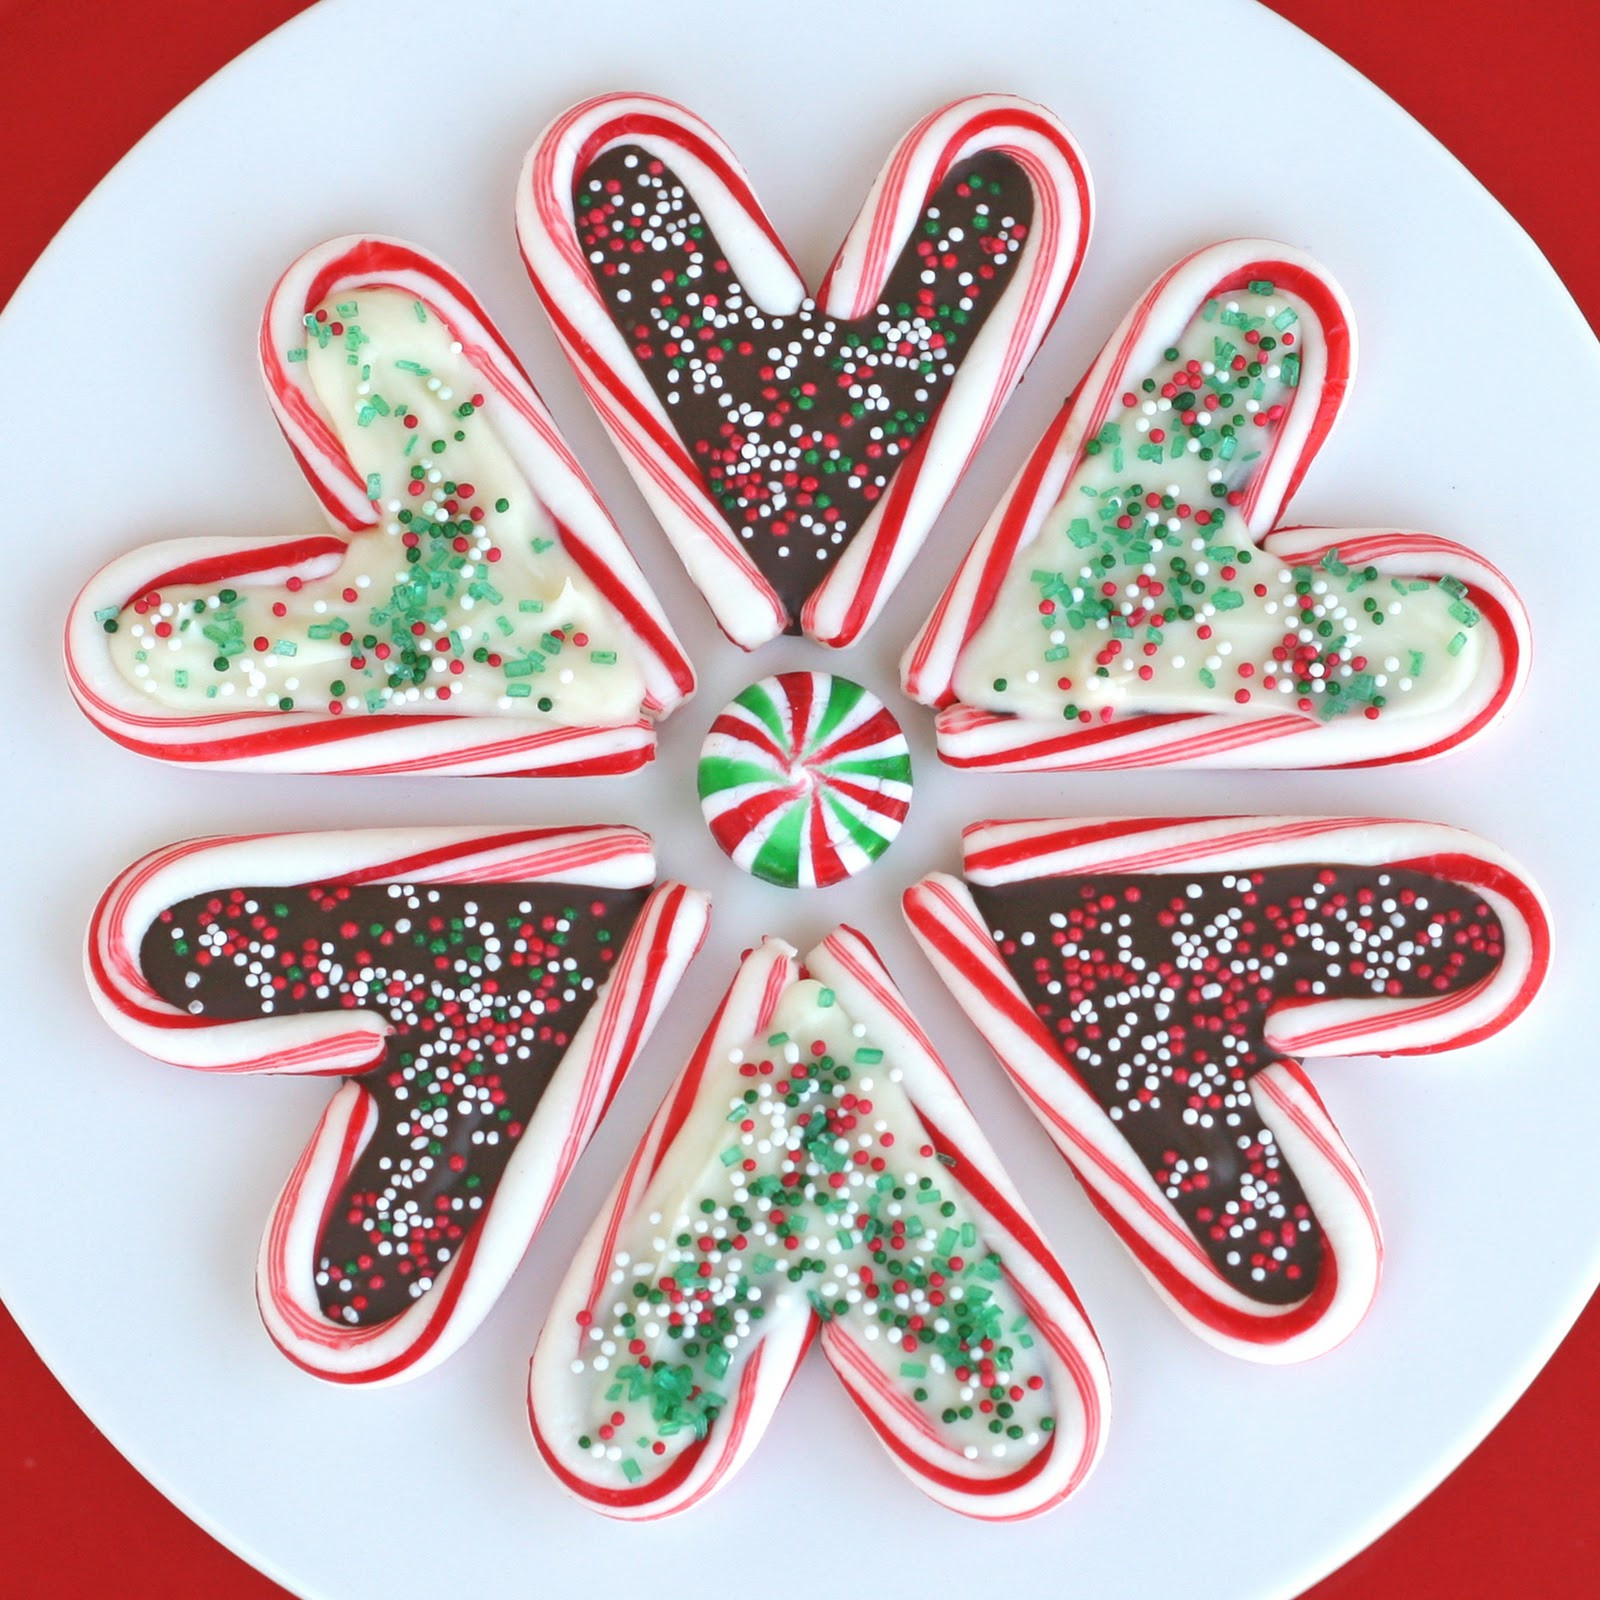 Heart Candy Christmas
 Candy Cane Hearts – Glorious Treats